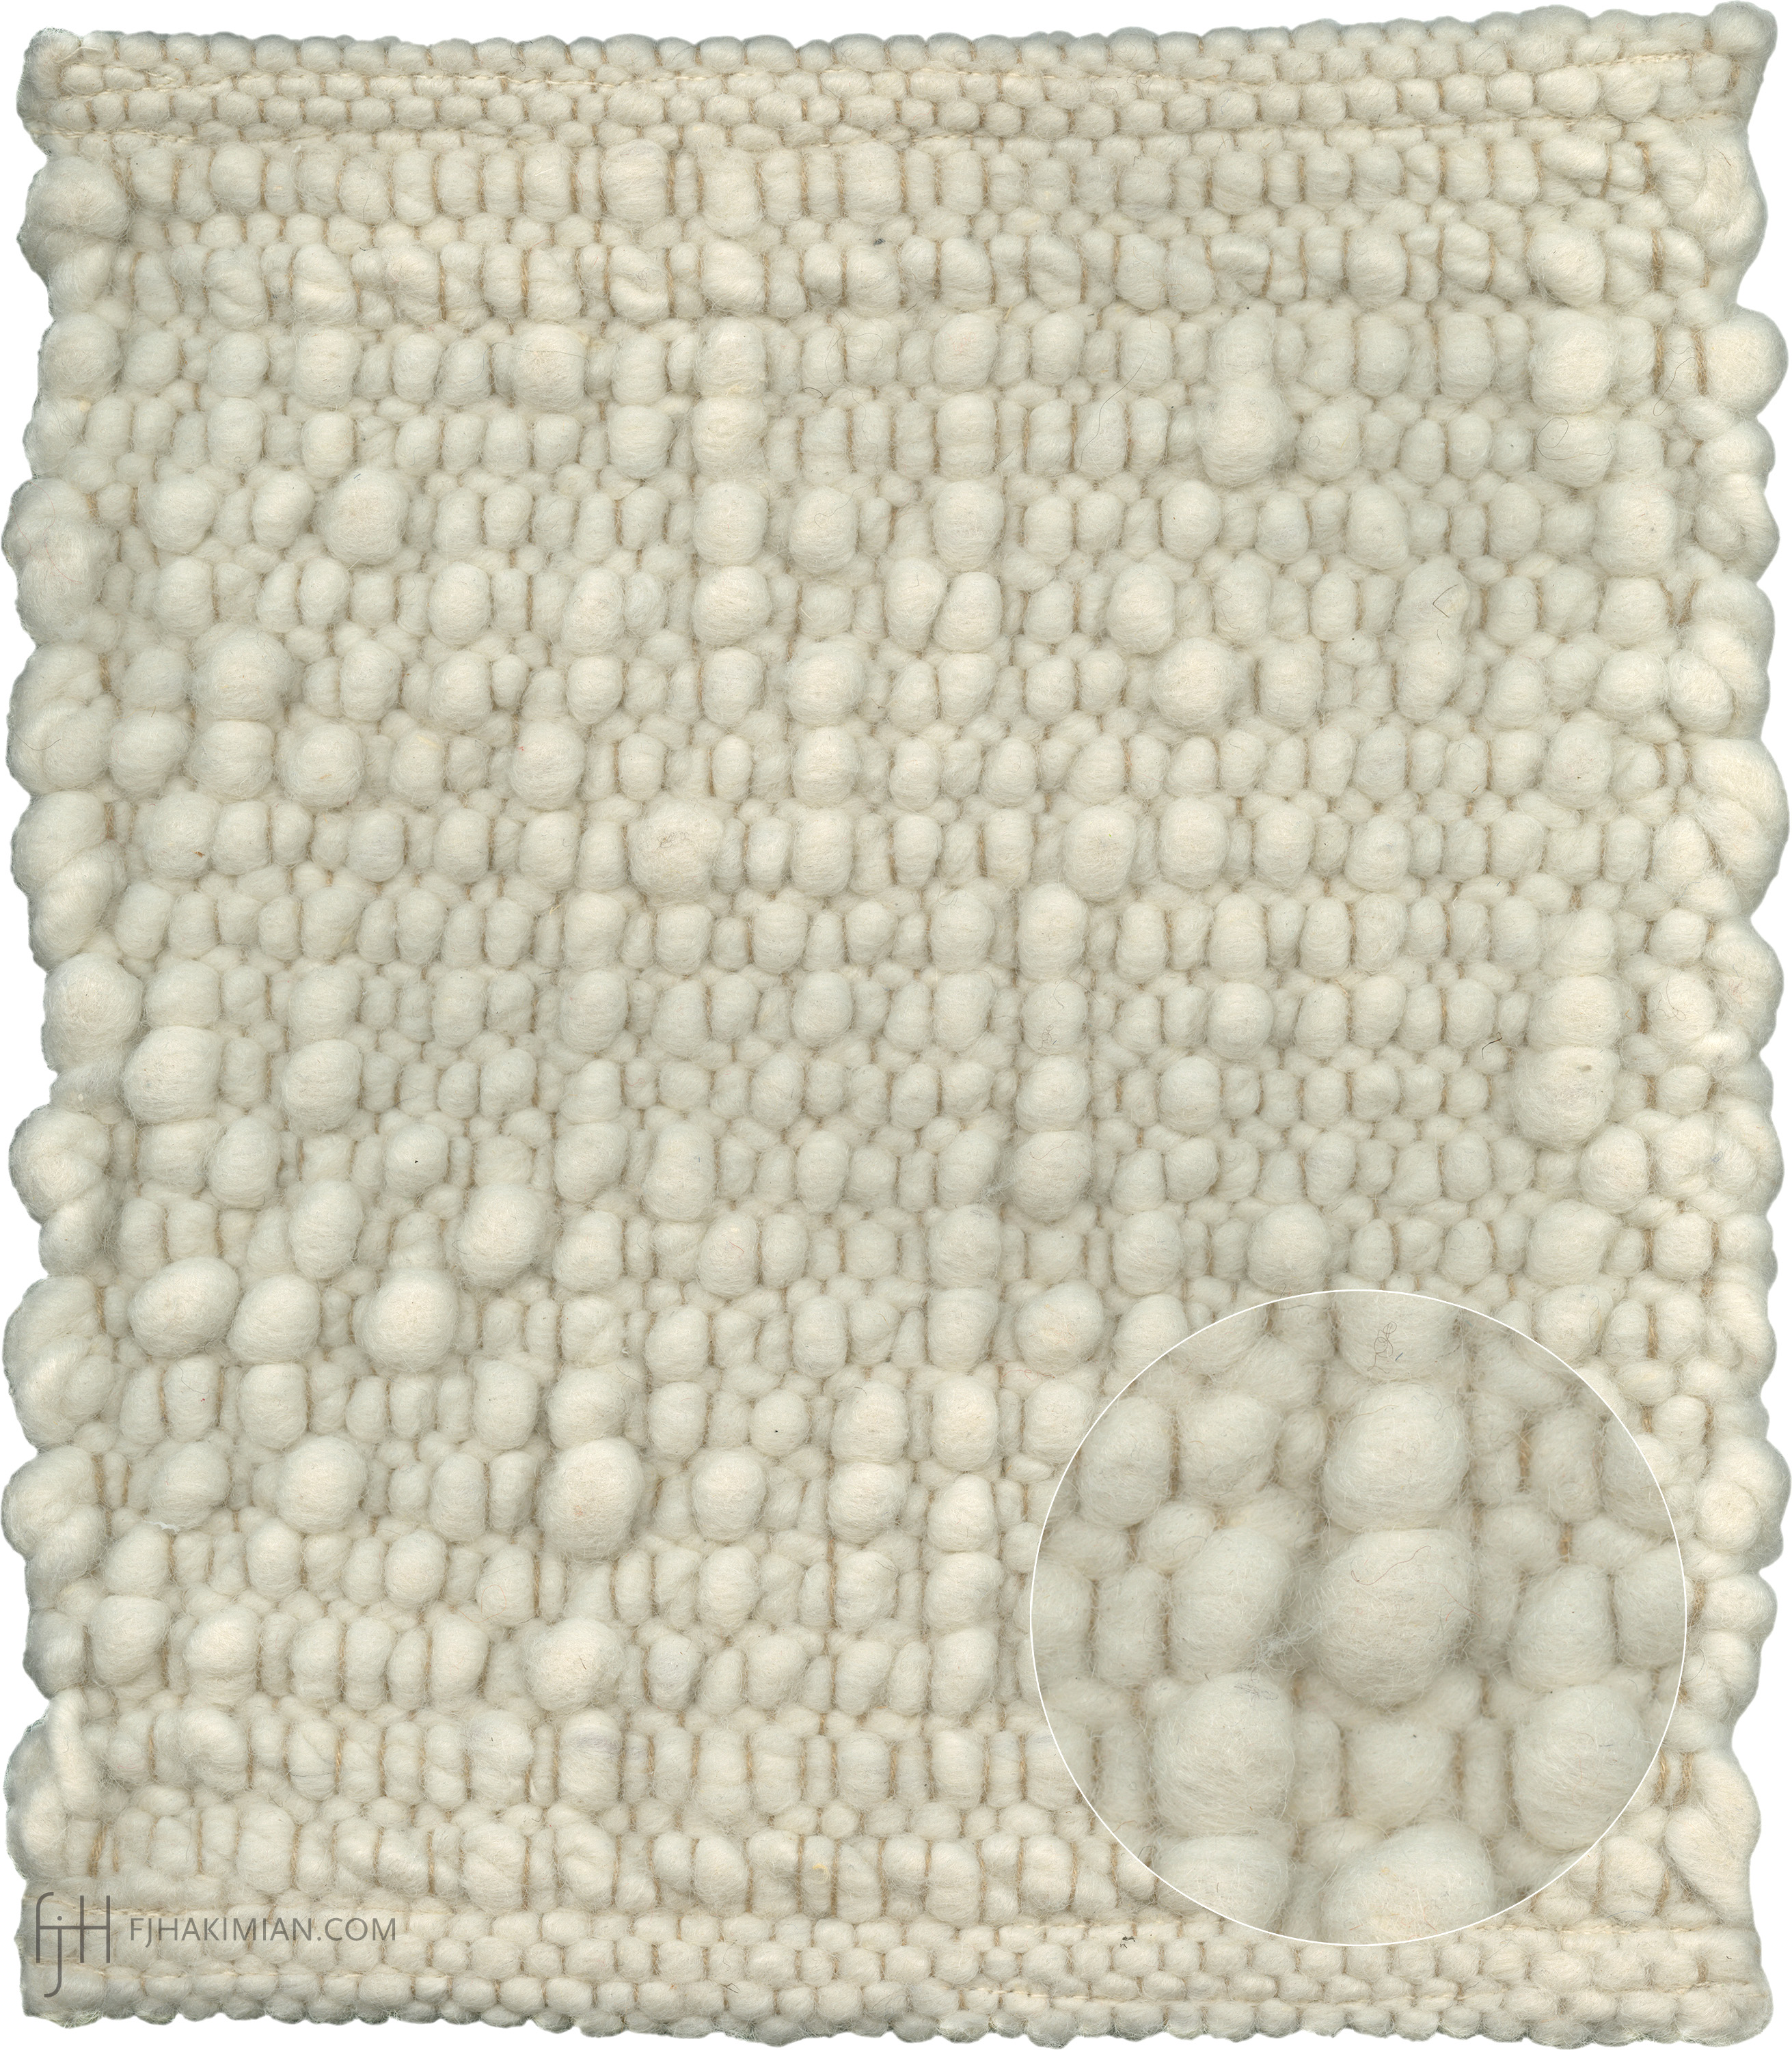 HH-Tugela 4407-1108 African Wool | FJ Hakimian